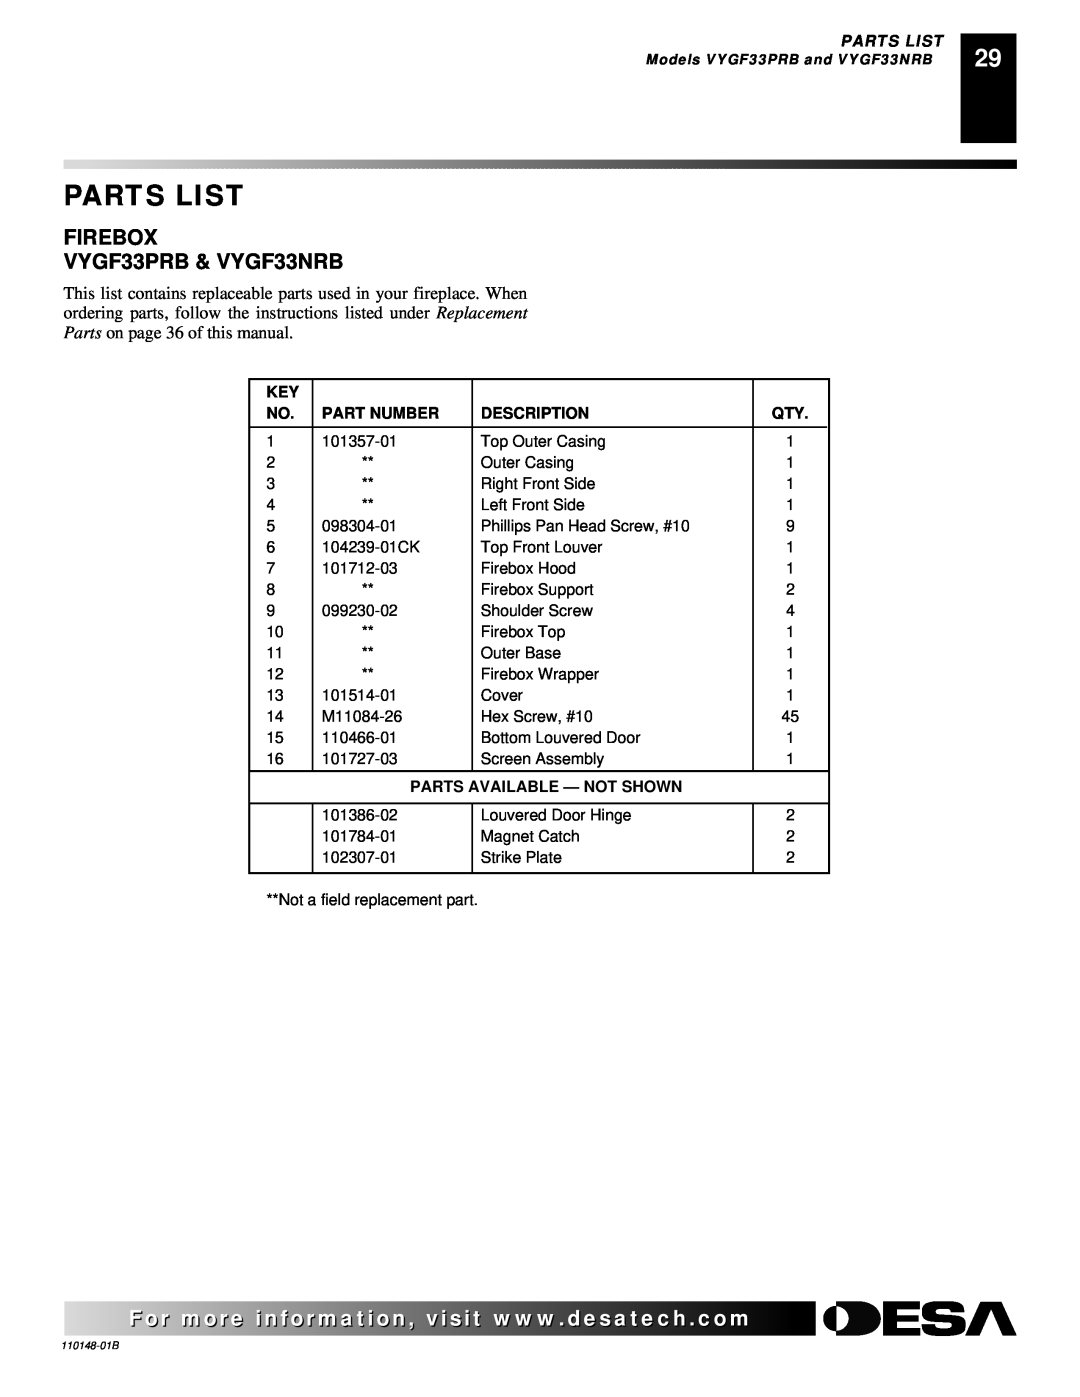 Desa FPVF33NRA FIREBOX VYGF33PRB & VYGF33NRB, Parts List, Part Number, Description, Parts Available - Not Shown 